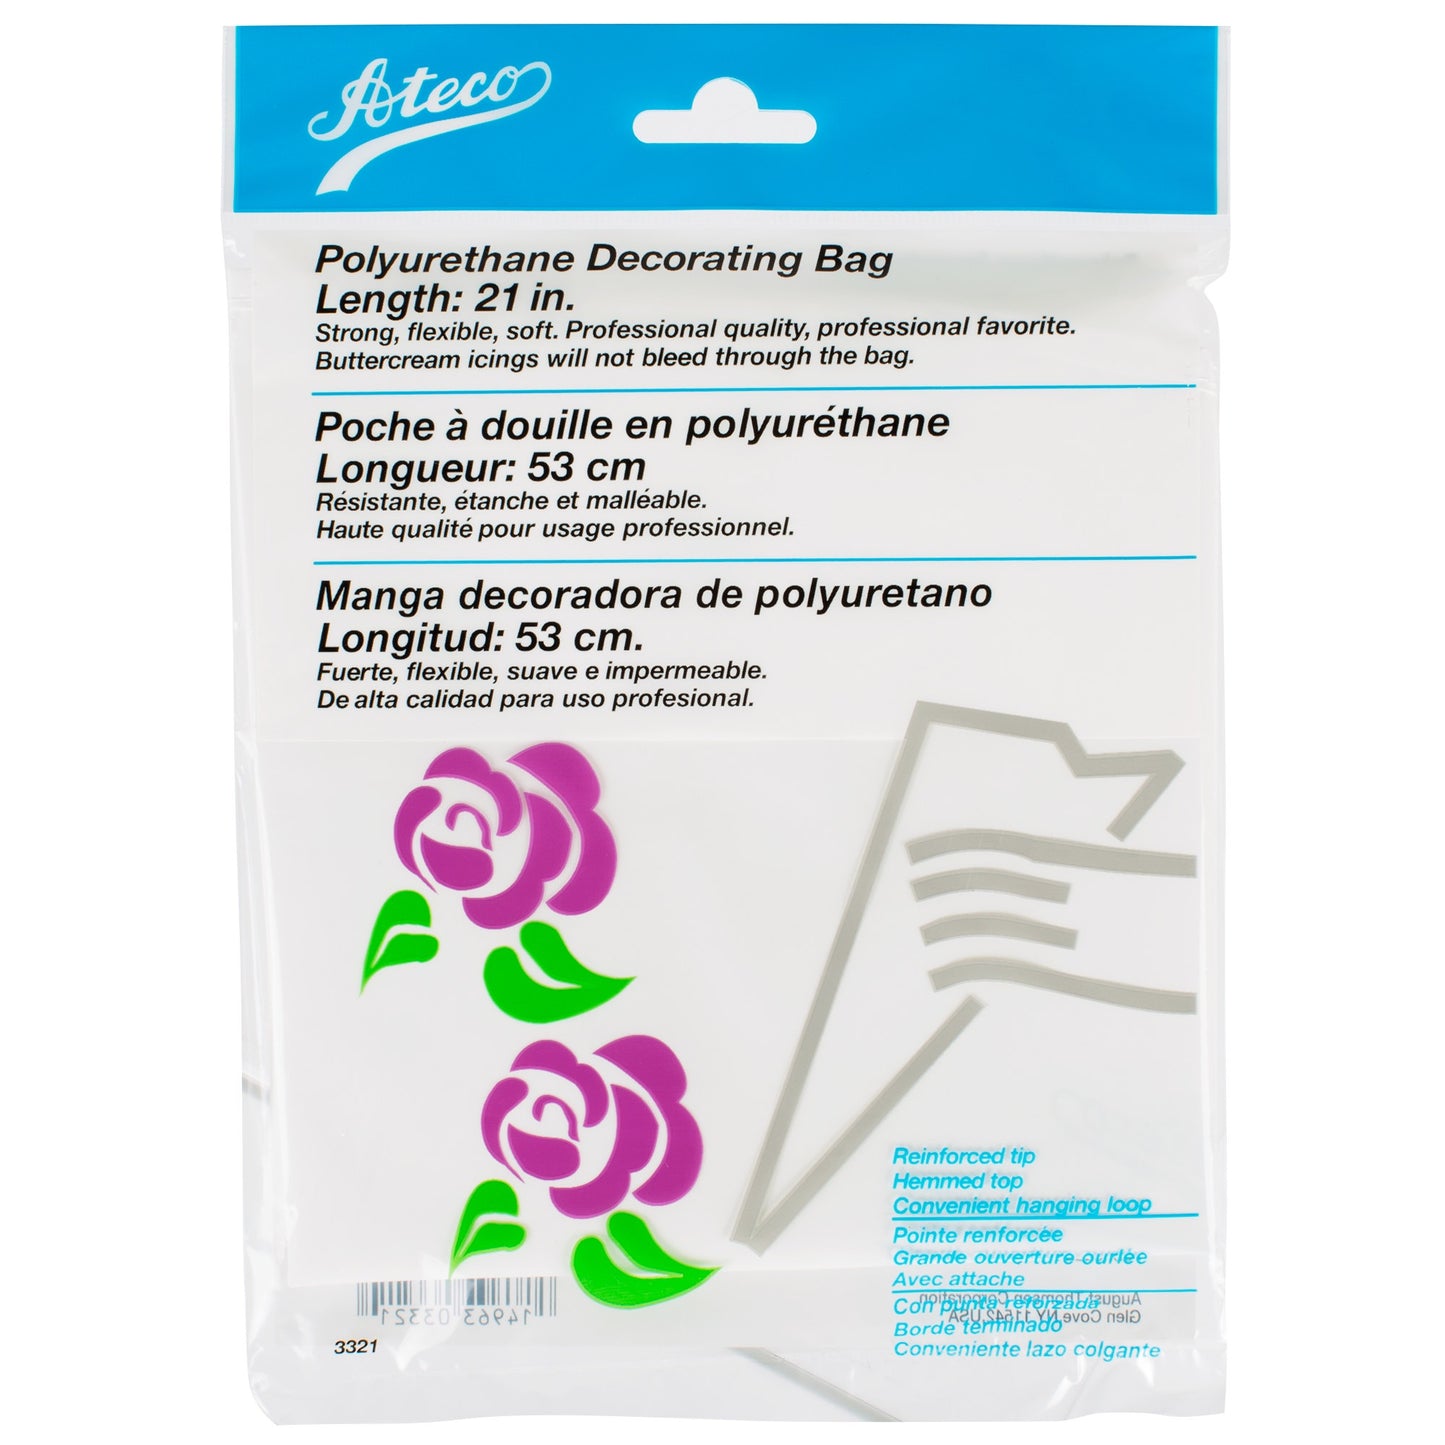 21 Inch, Ateco Polyurethane Decorating / Piping Bag